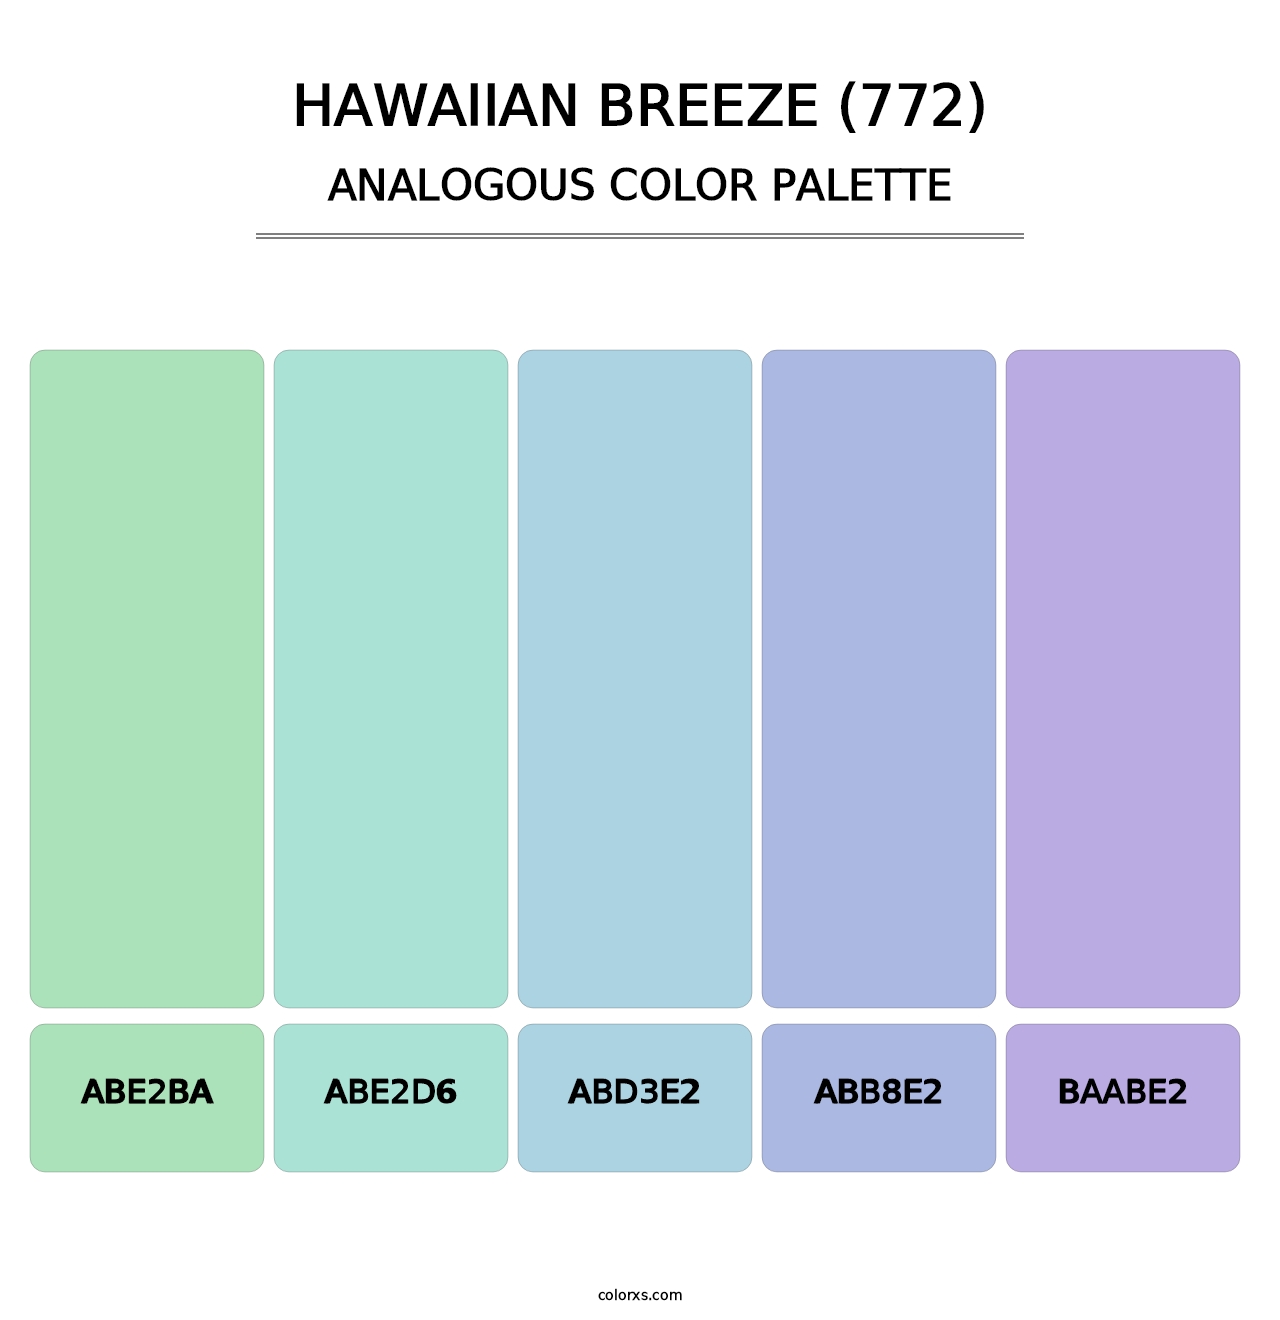 Hawaiian Breeze (772) - Analogous Color Palette